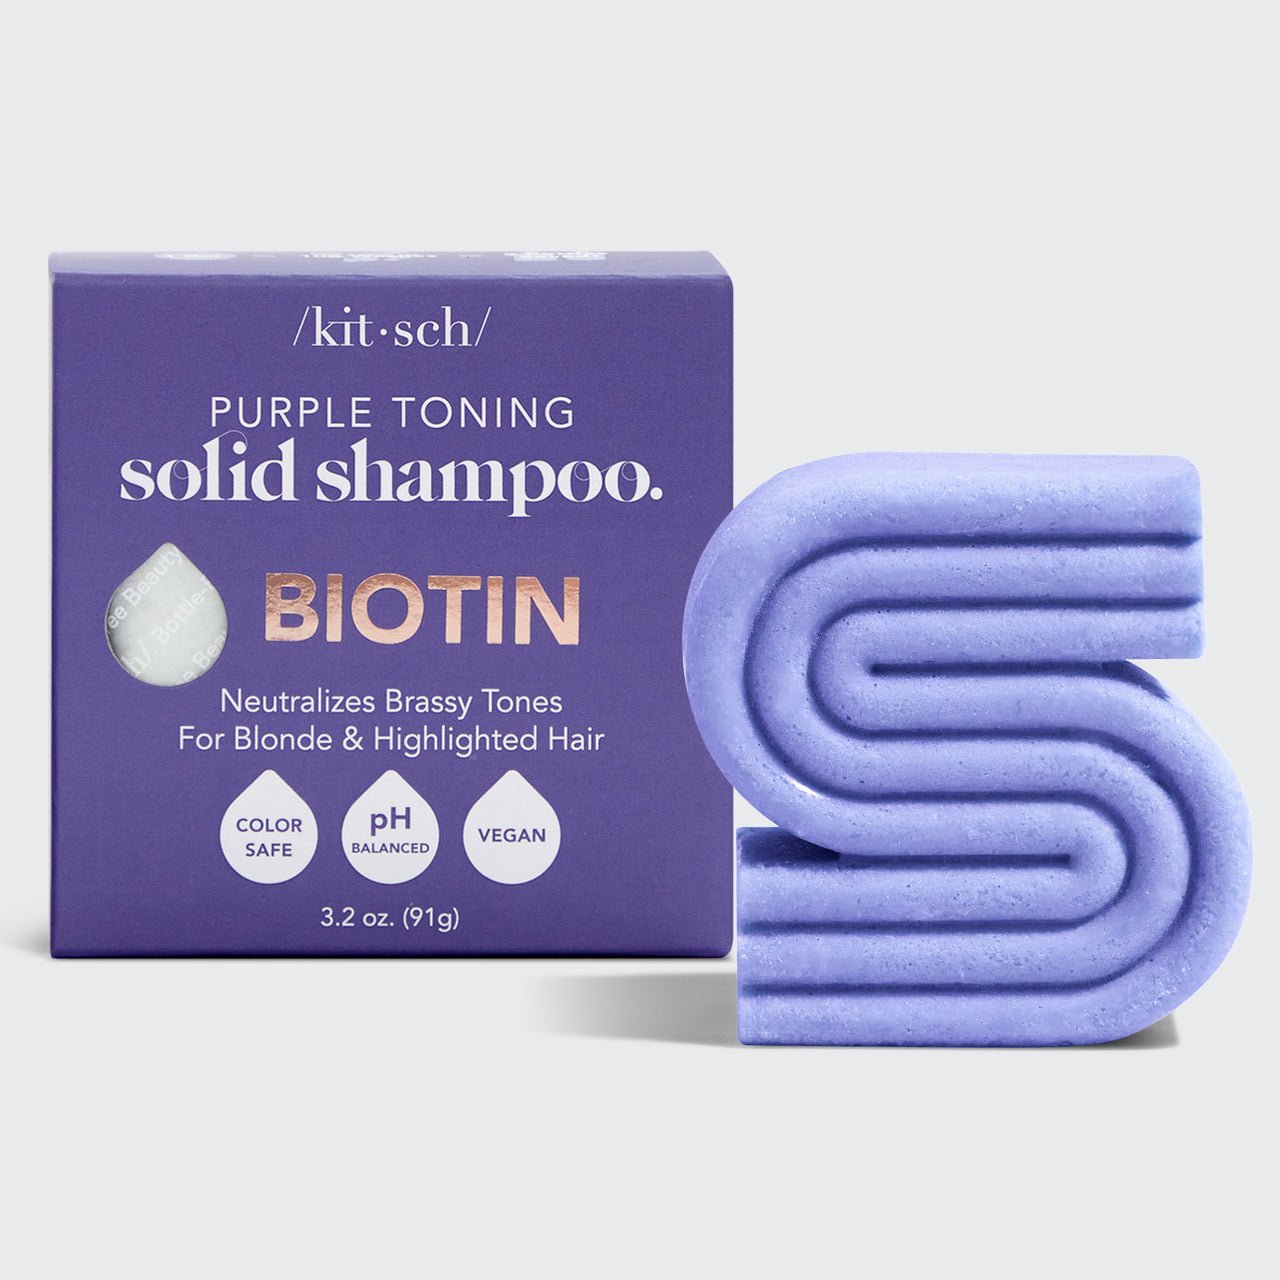 Kitsch - Purple Toning Biotin Shampoo Bar